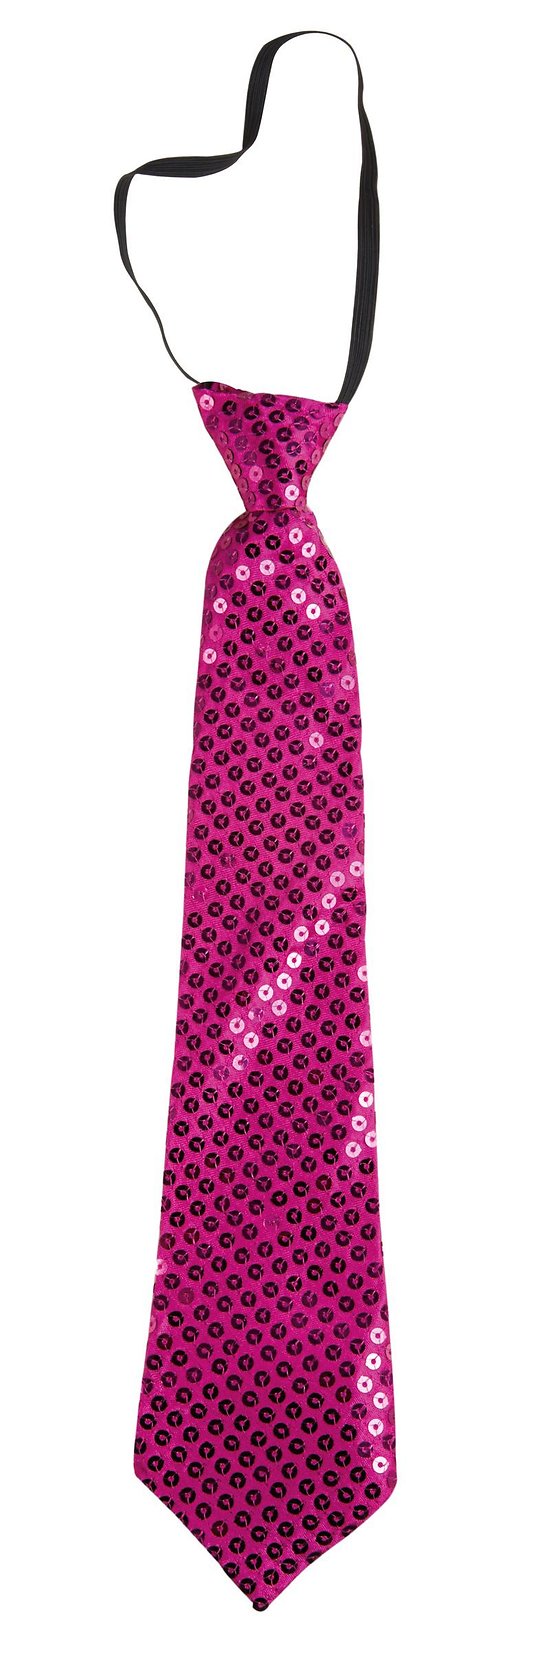 Cravate rose avec sequins transparents adulte